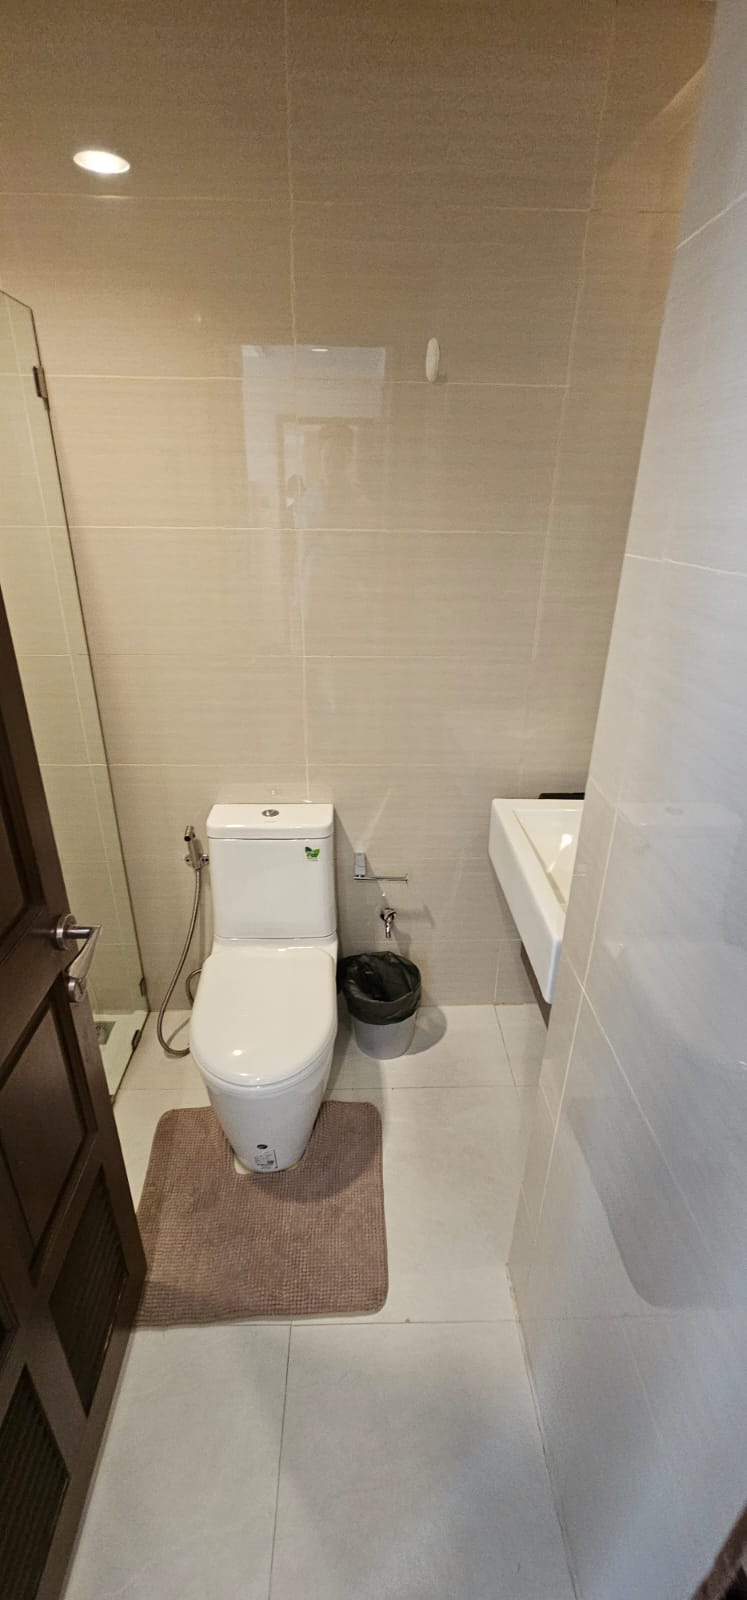 2 Bedroom, 2 Bathroom 150 sqm size at Ploenruedee Residence For Rent 62K THB